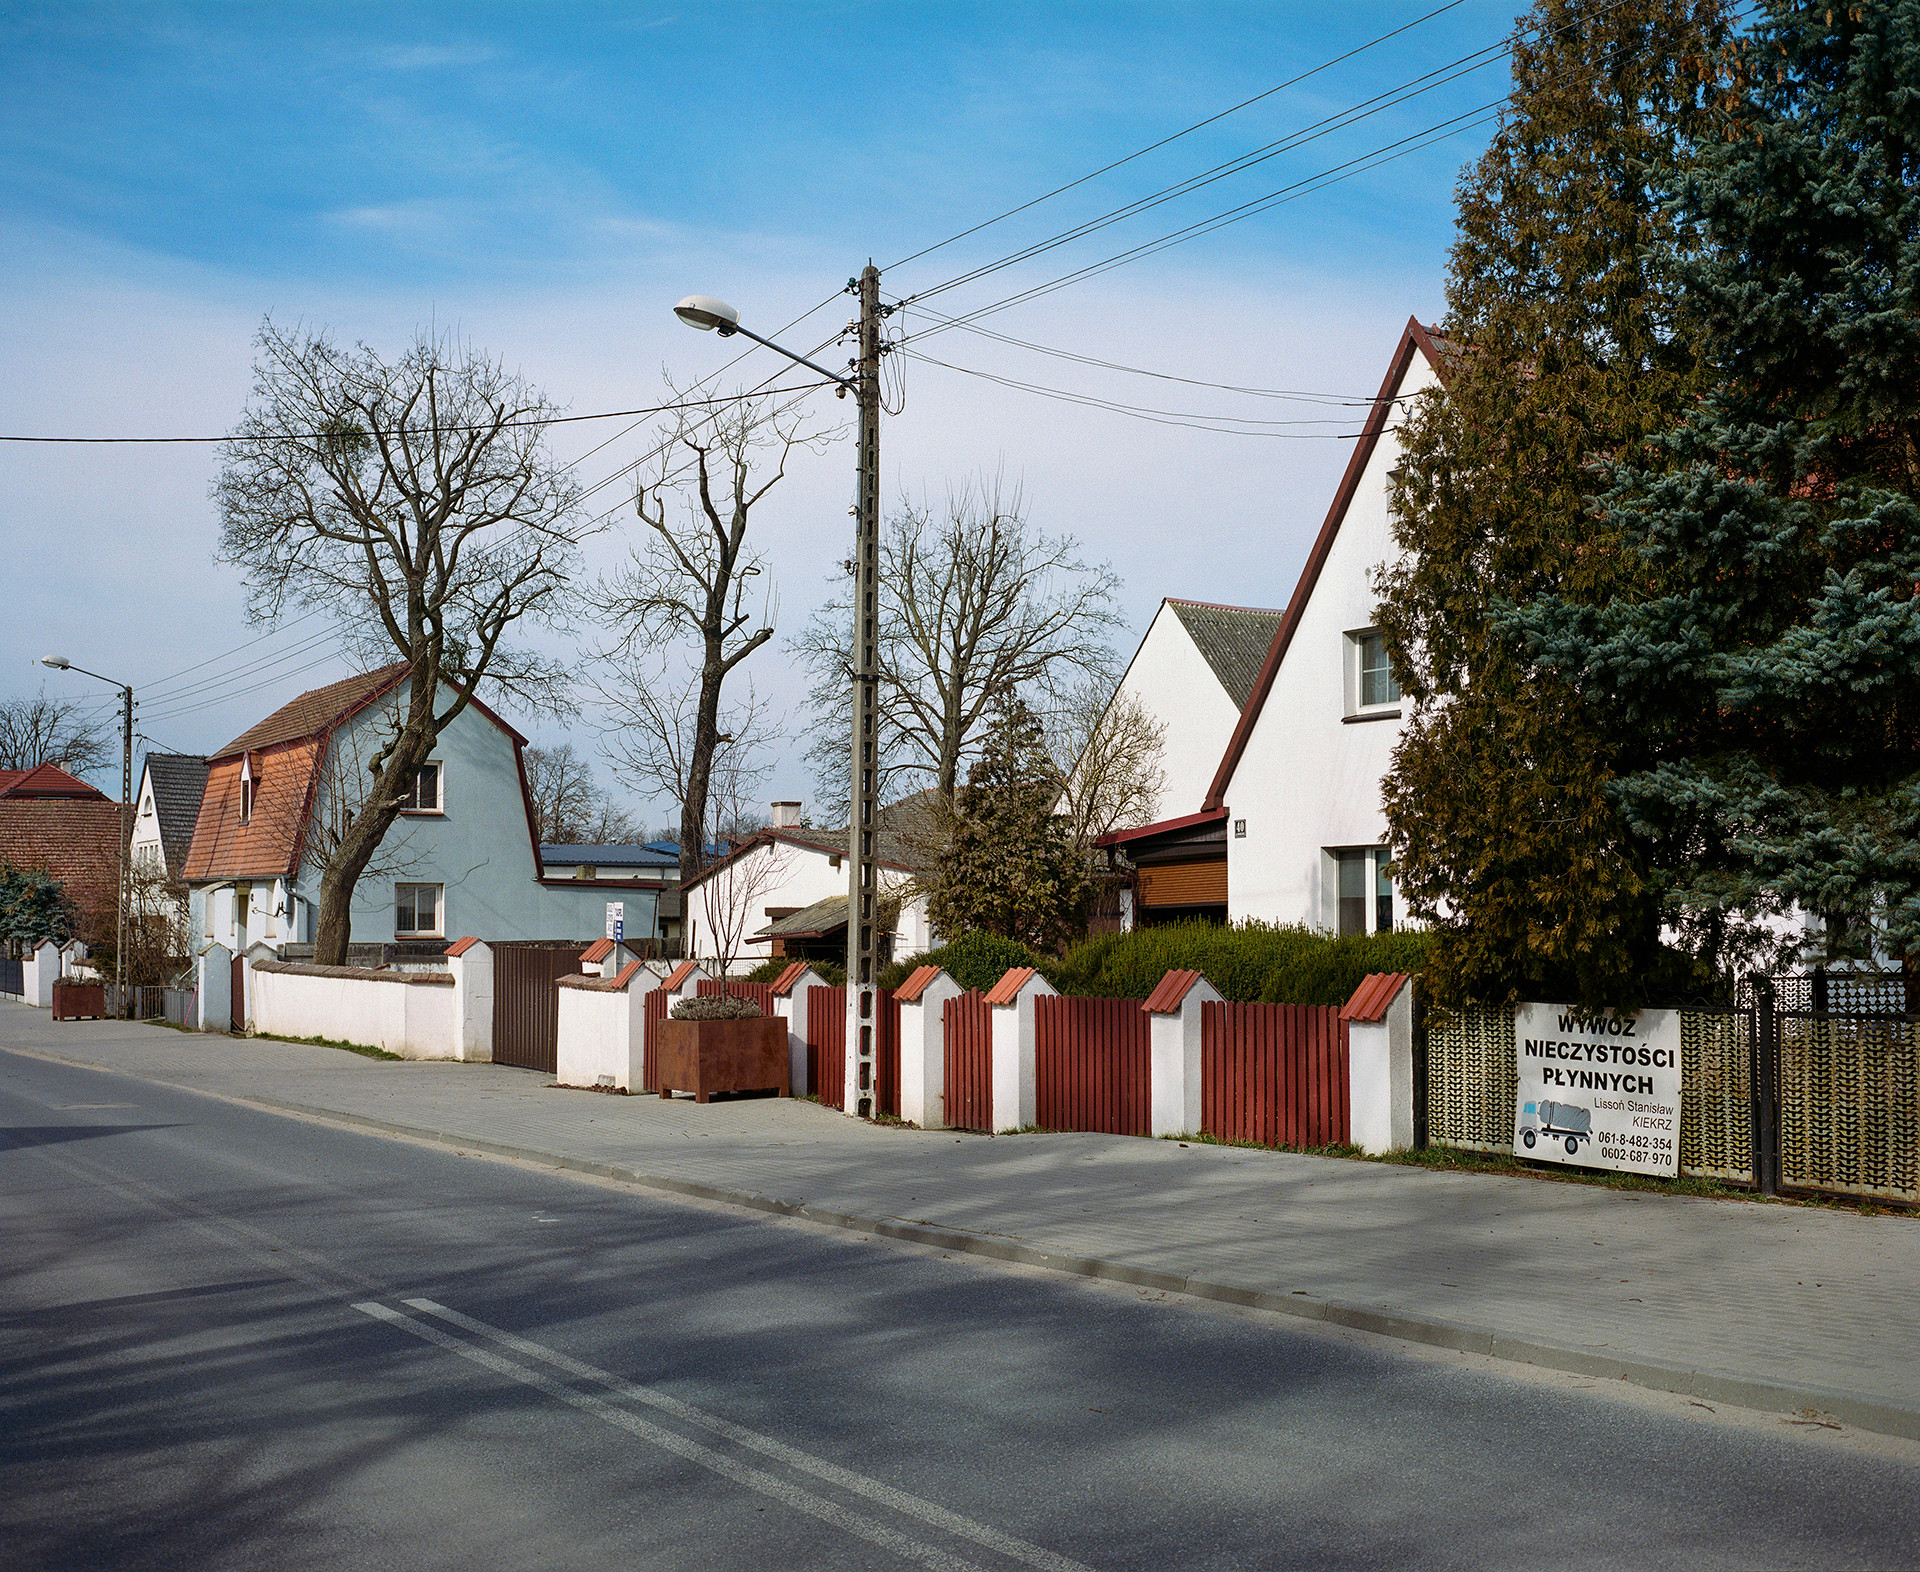 Golęczewo, Poland, formerly a German ‘model village’ known as Golenhofen